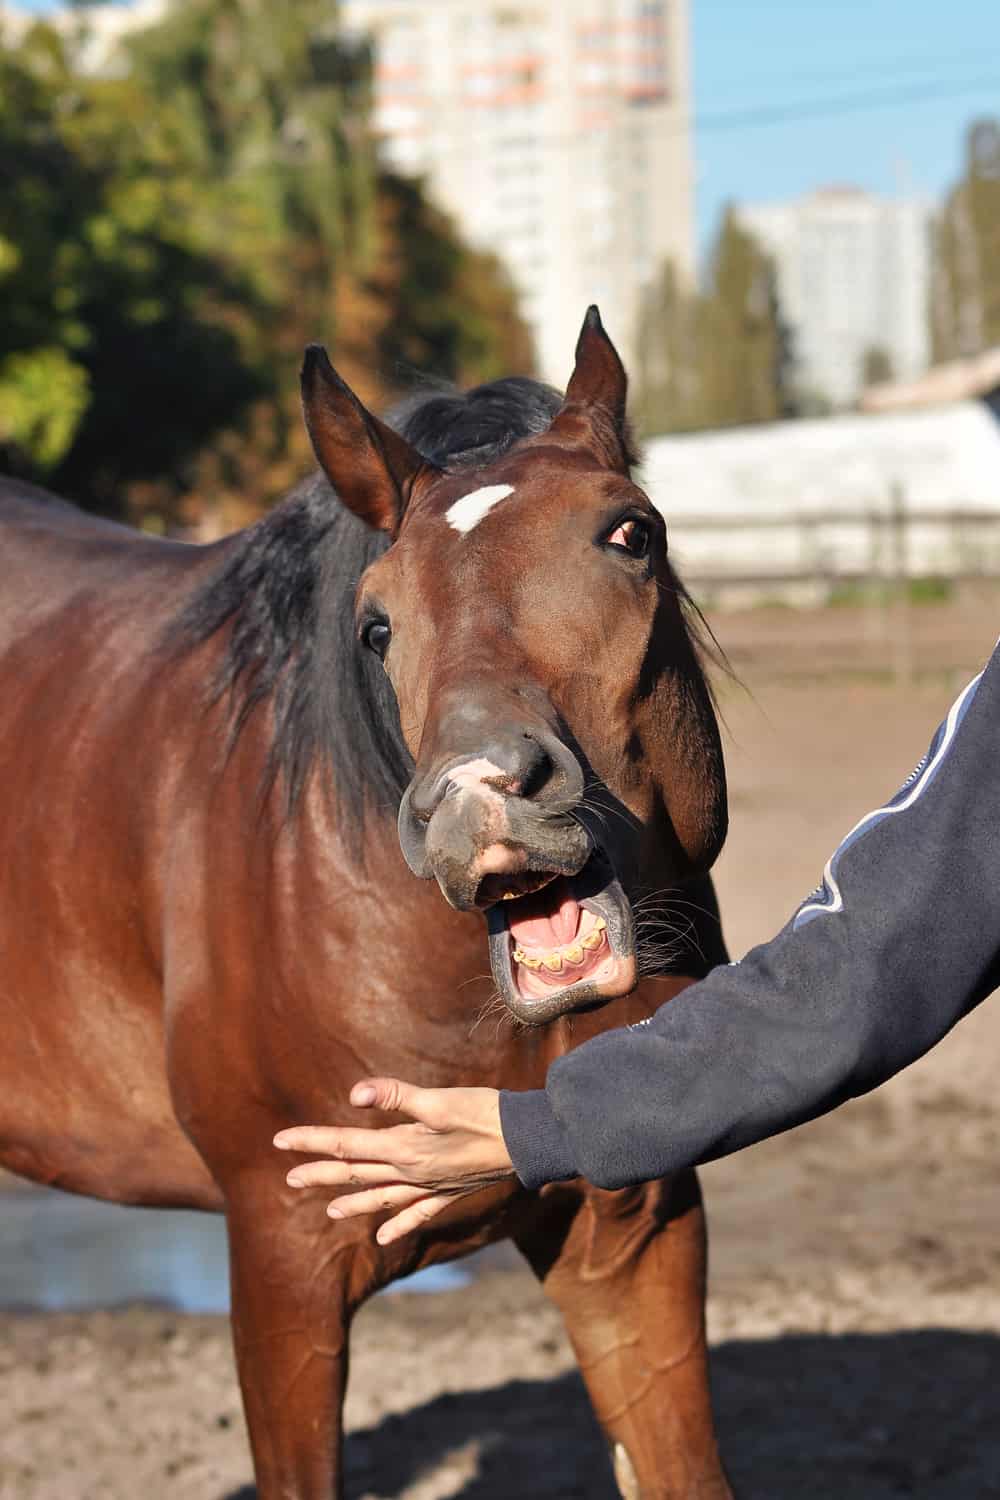 Horses bite when sick or uncomfortable